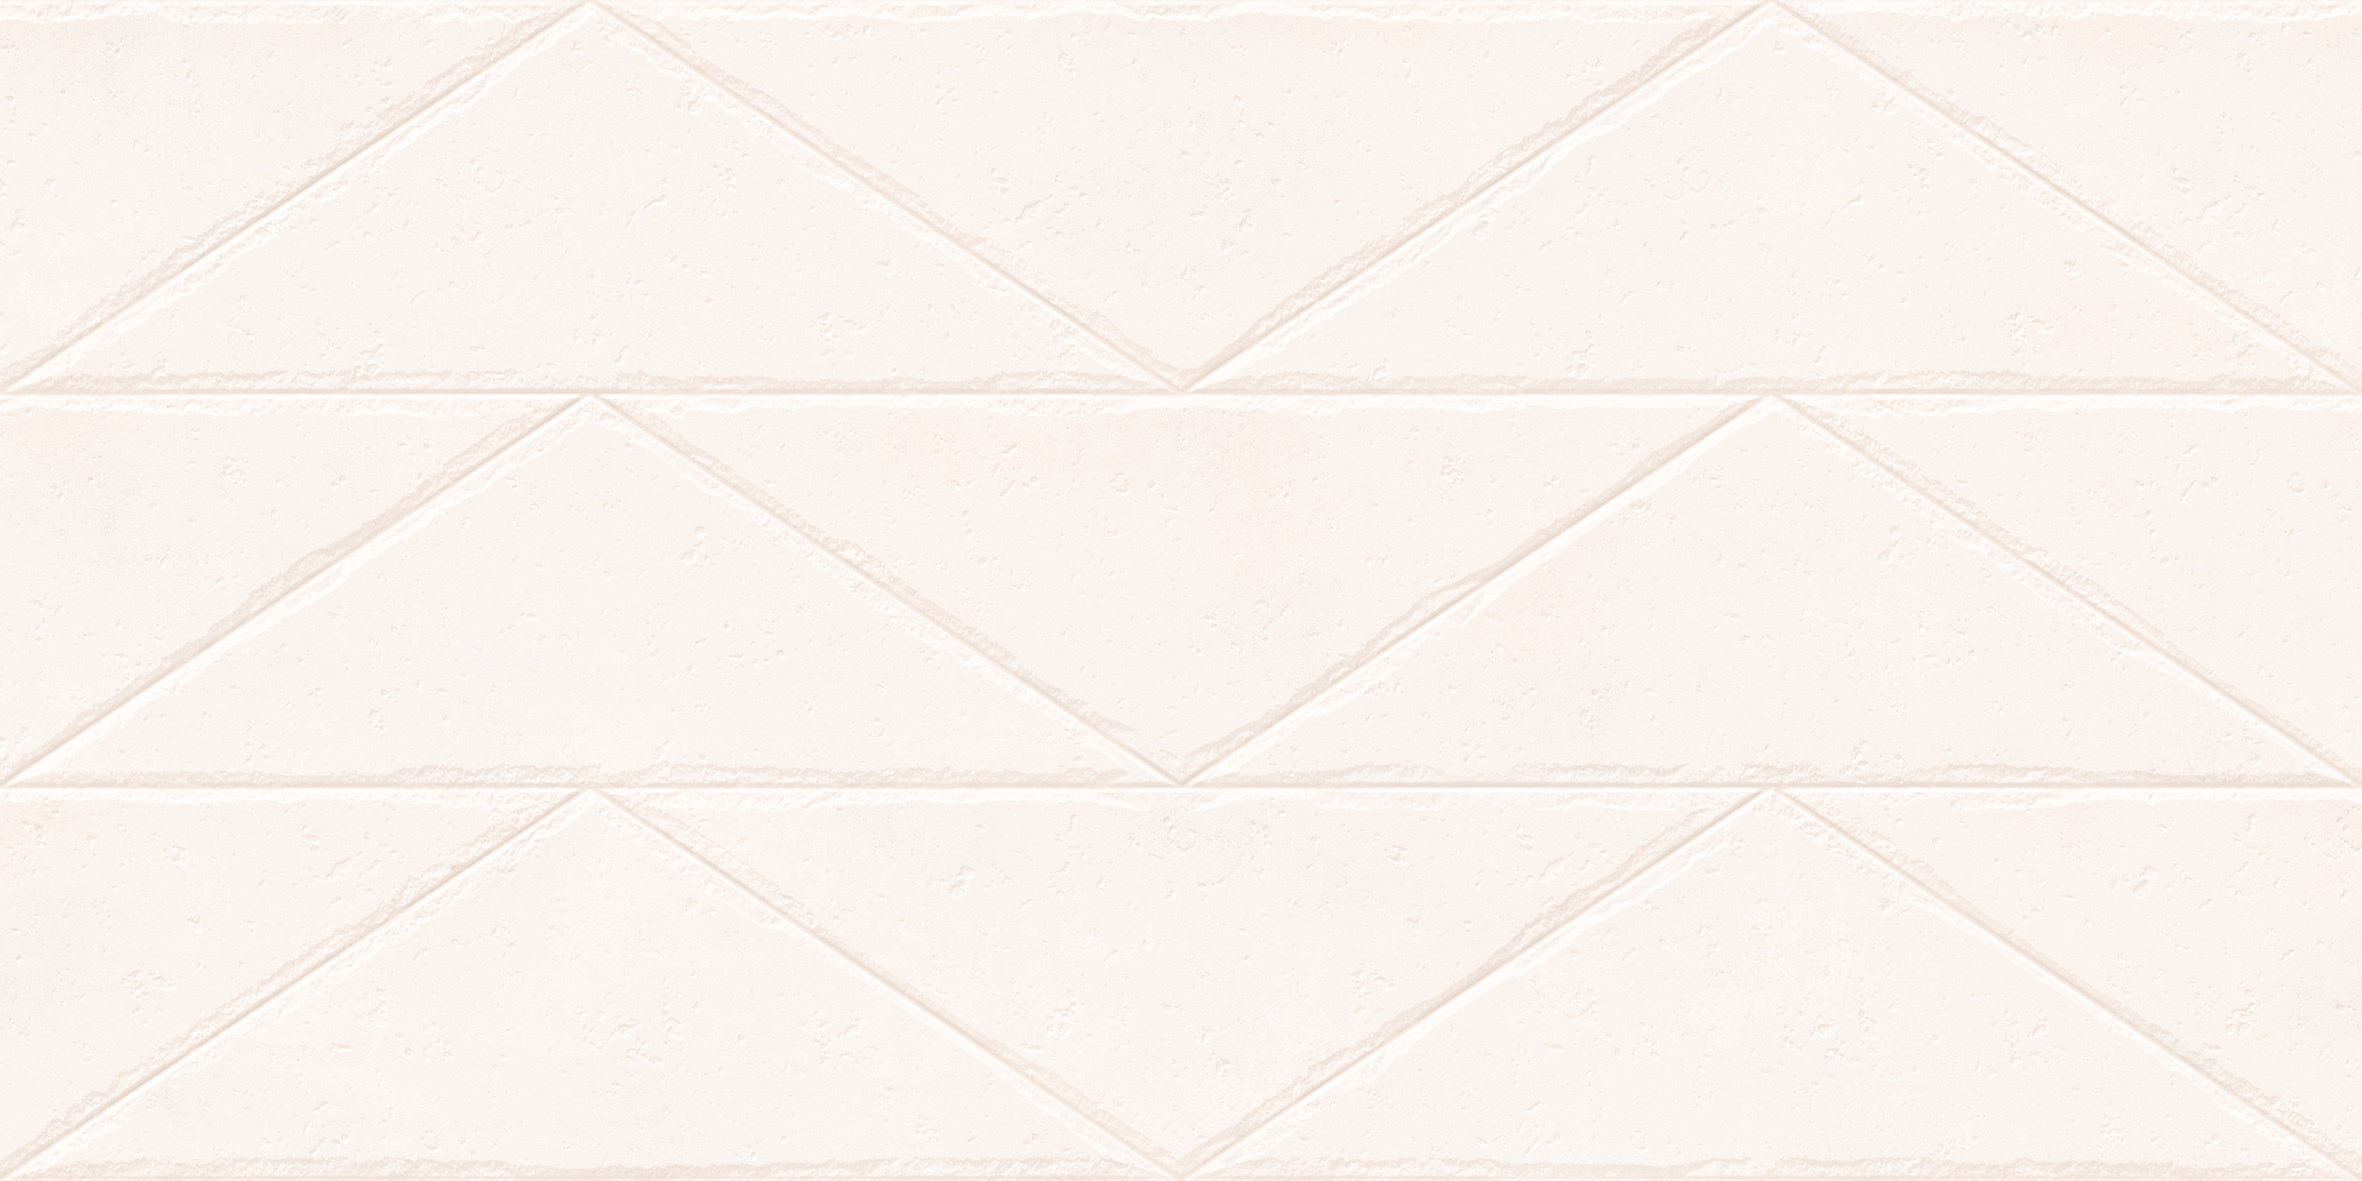 22019 Matt Ceramic Wall Tiles 300x600mm